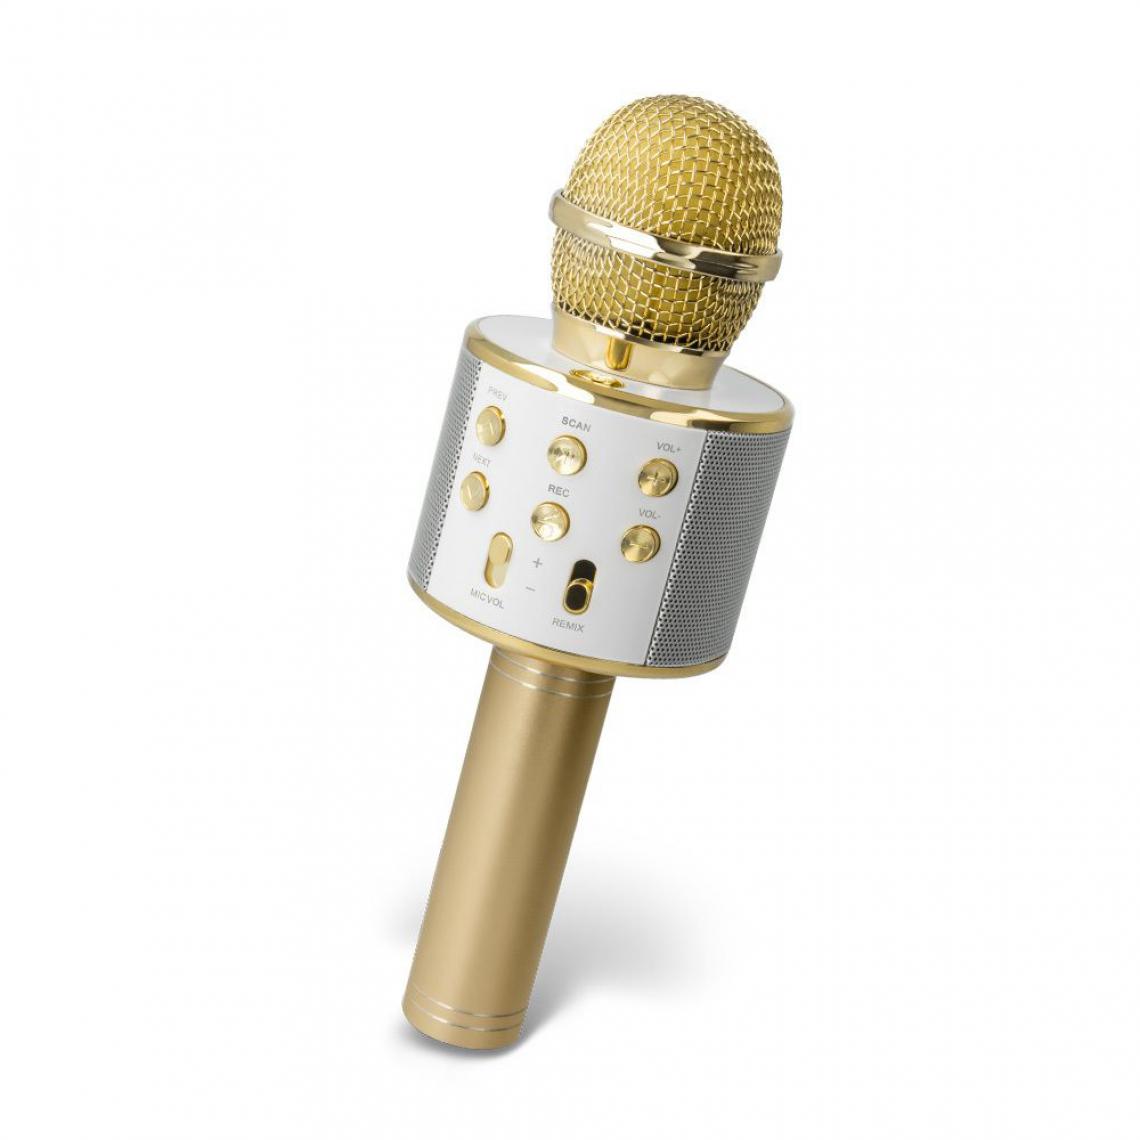 Ozzzo - Microphone Karaoke bluetooth haut parleur ozzzo Gold Or pour Samsung Galaxy Tab E 9.6" - Autres accessoires smartphone